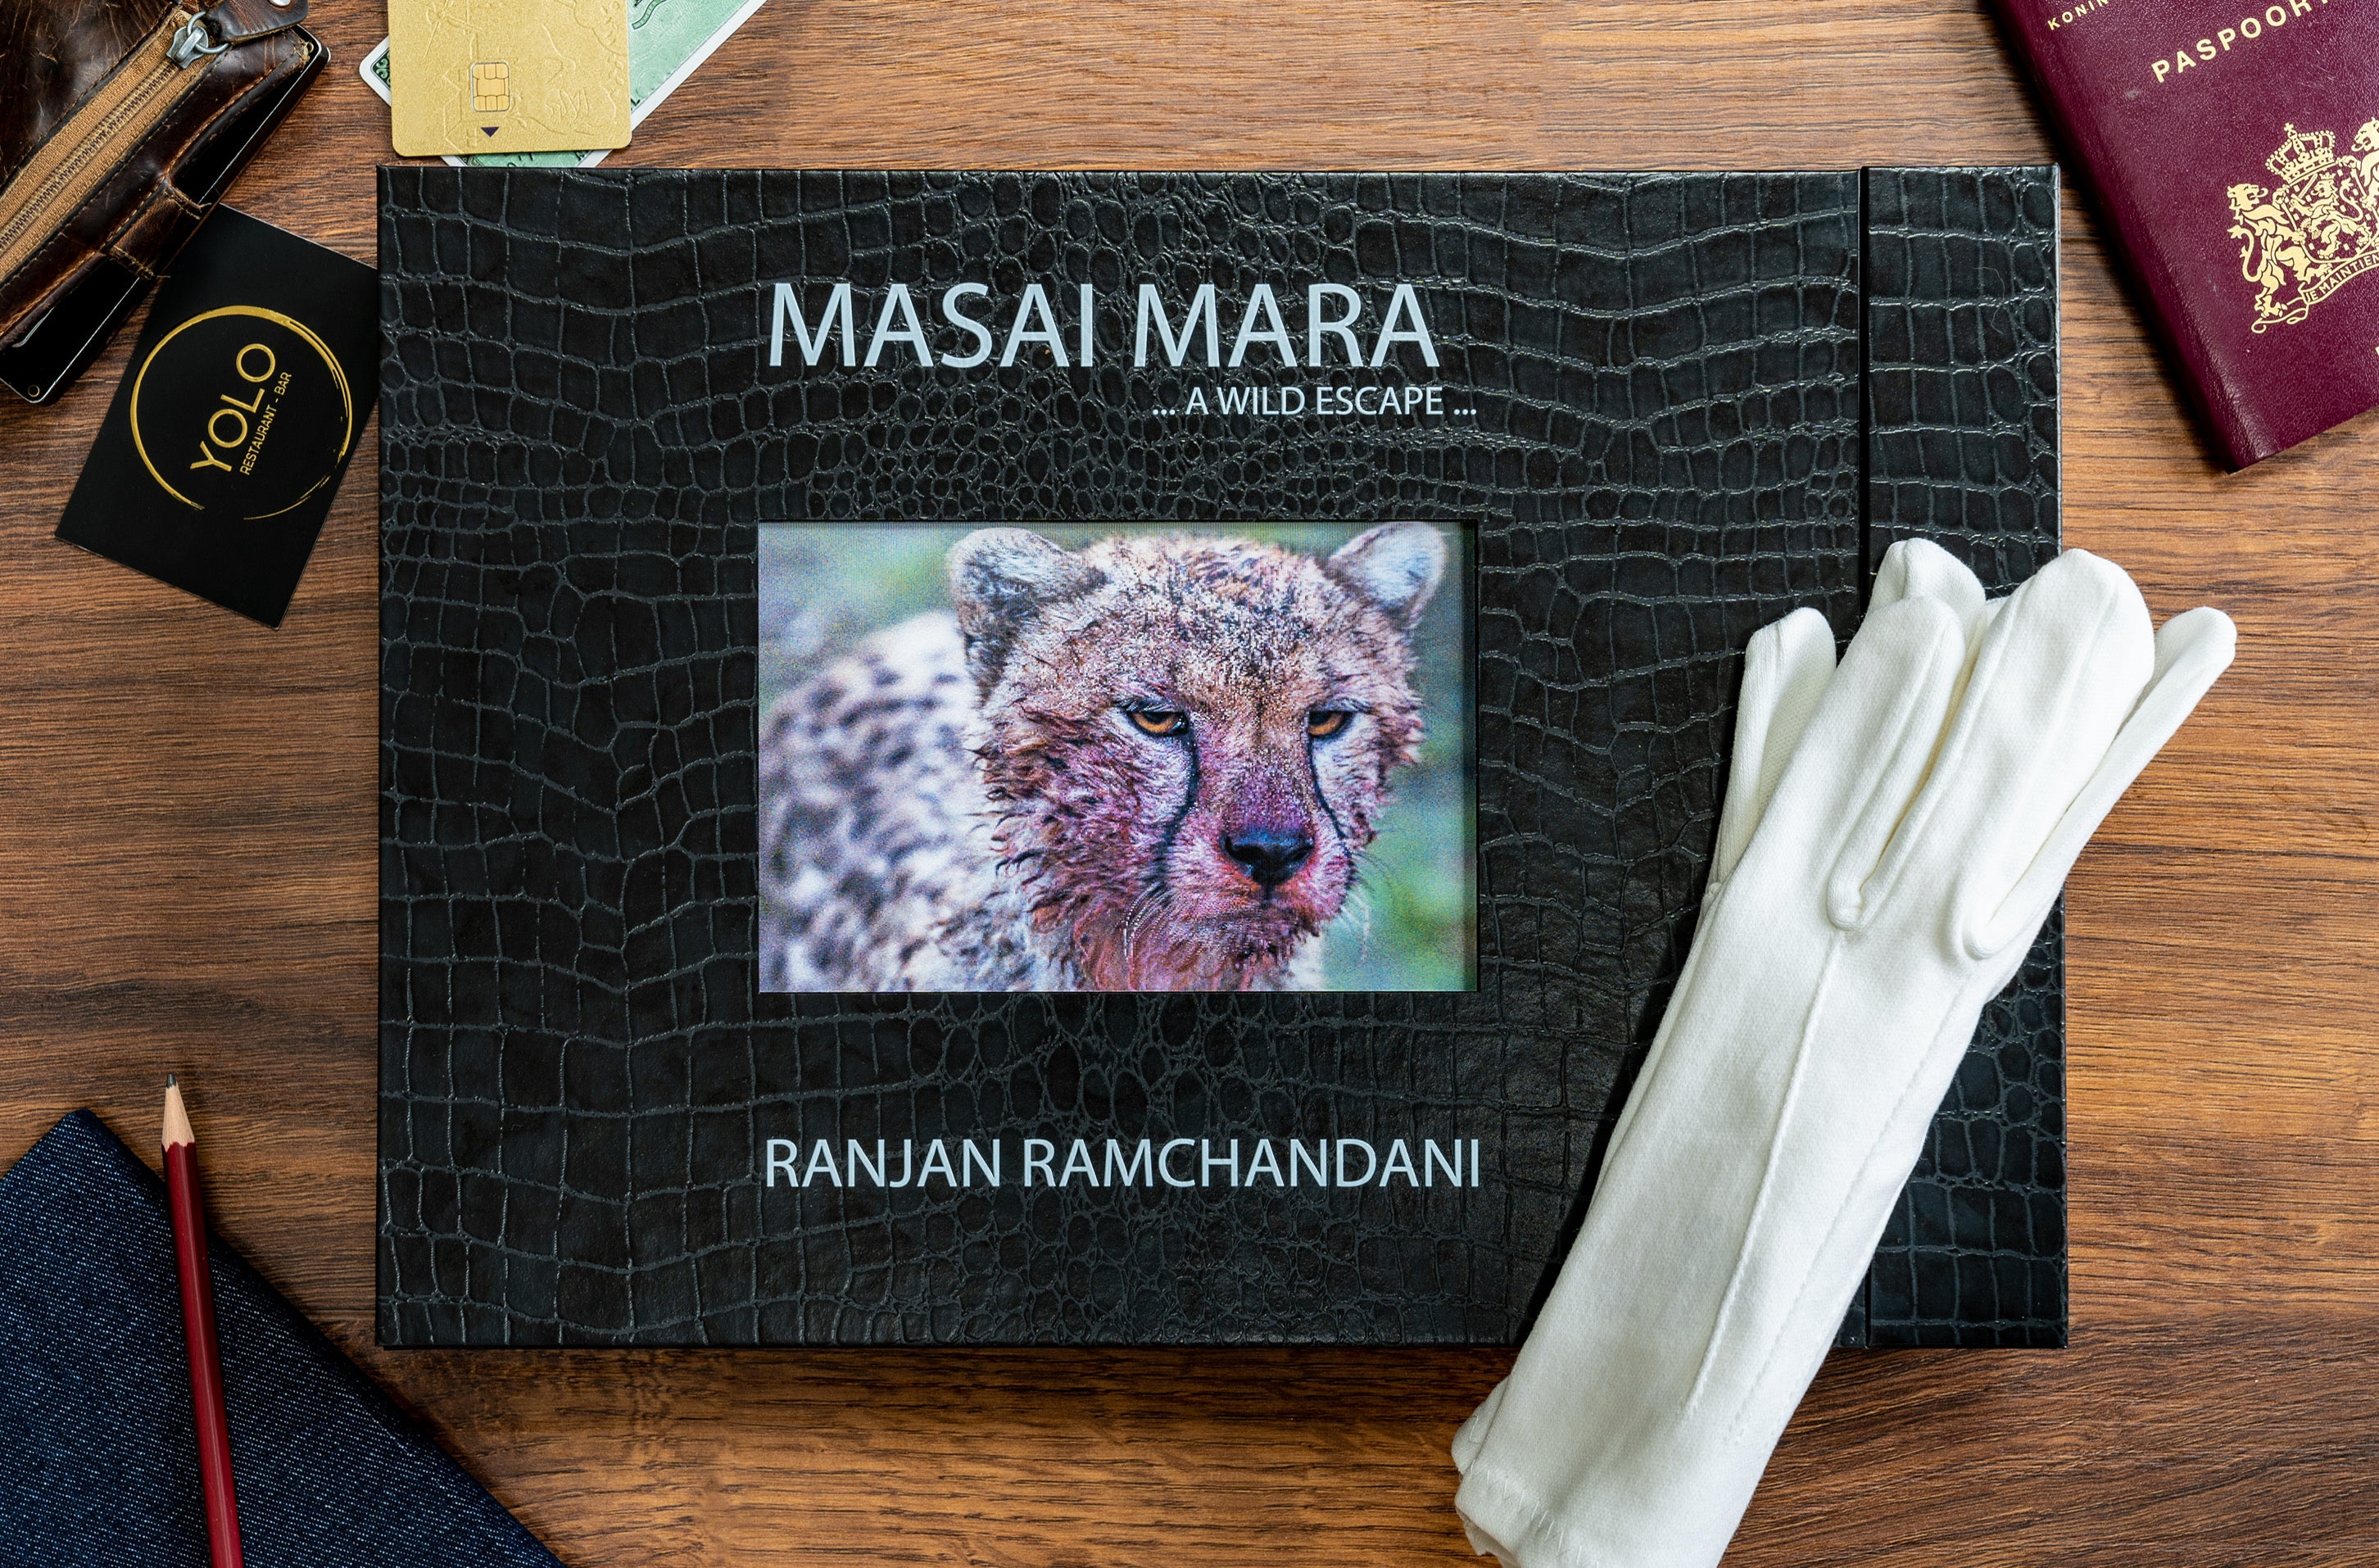 Masai Mara *Limited edition